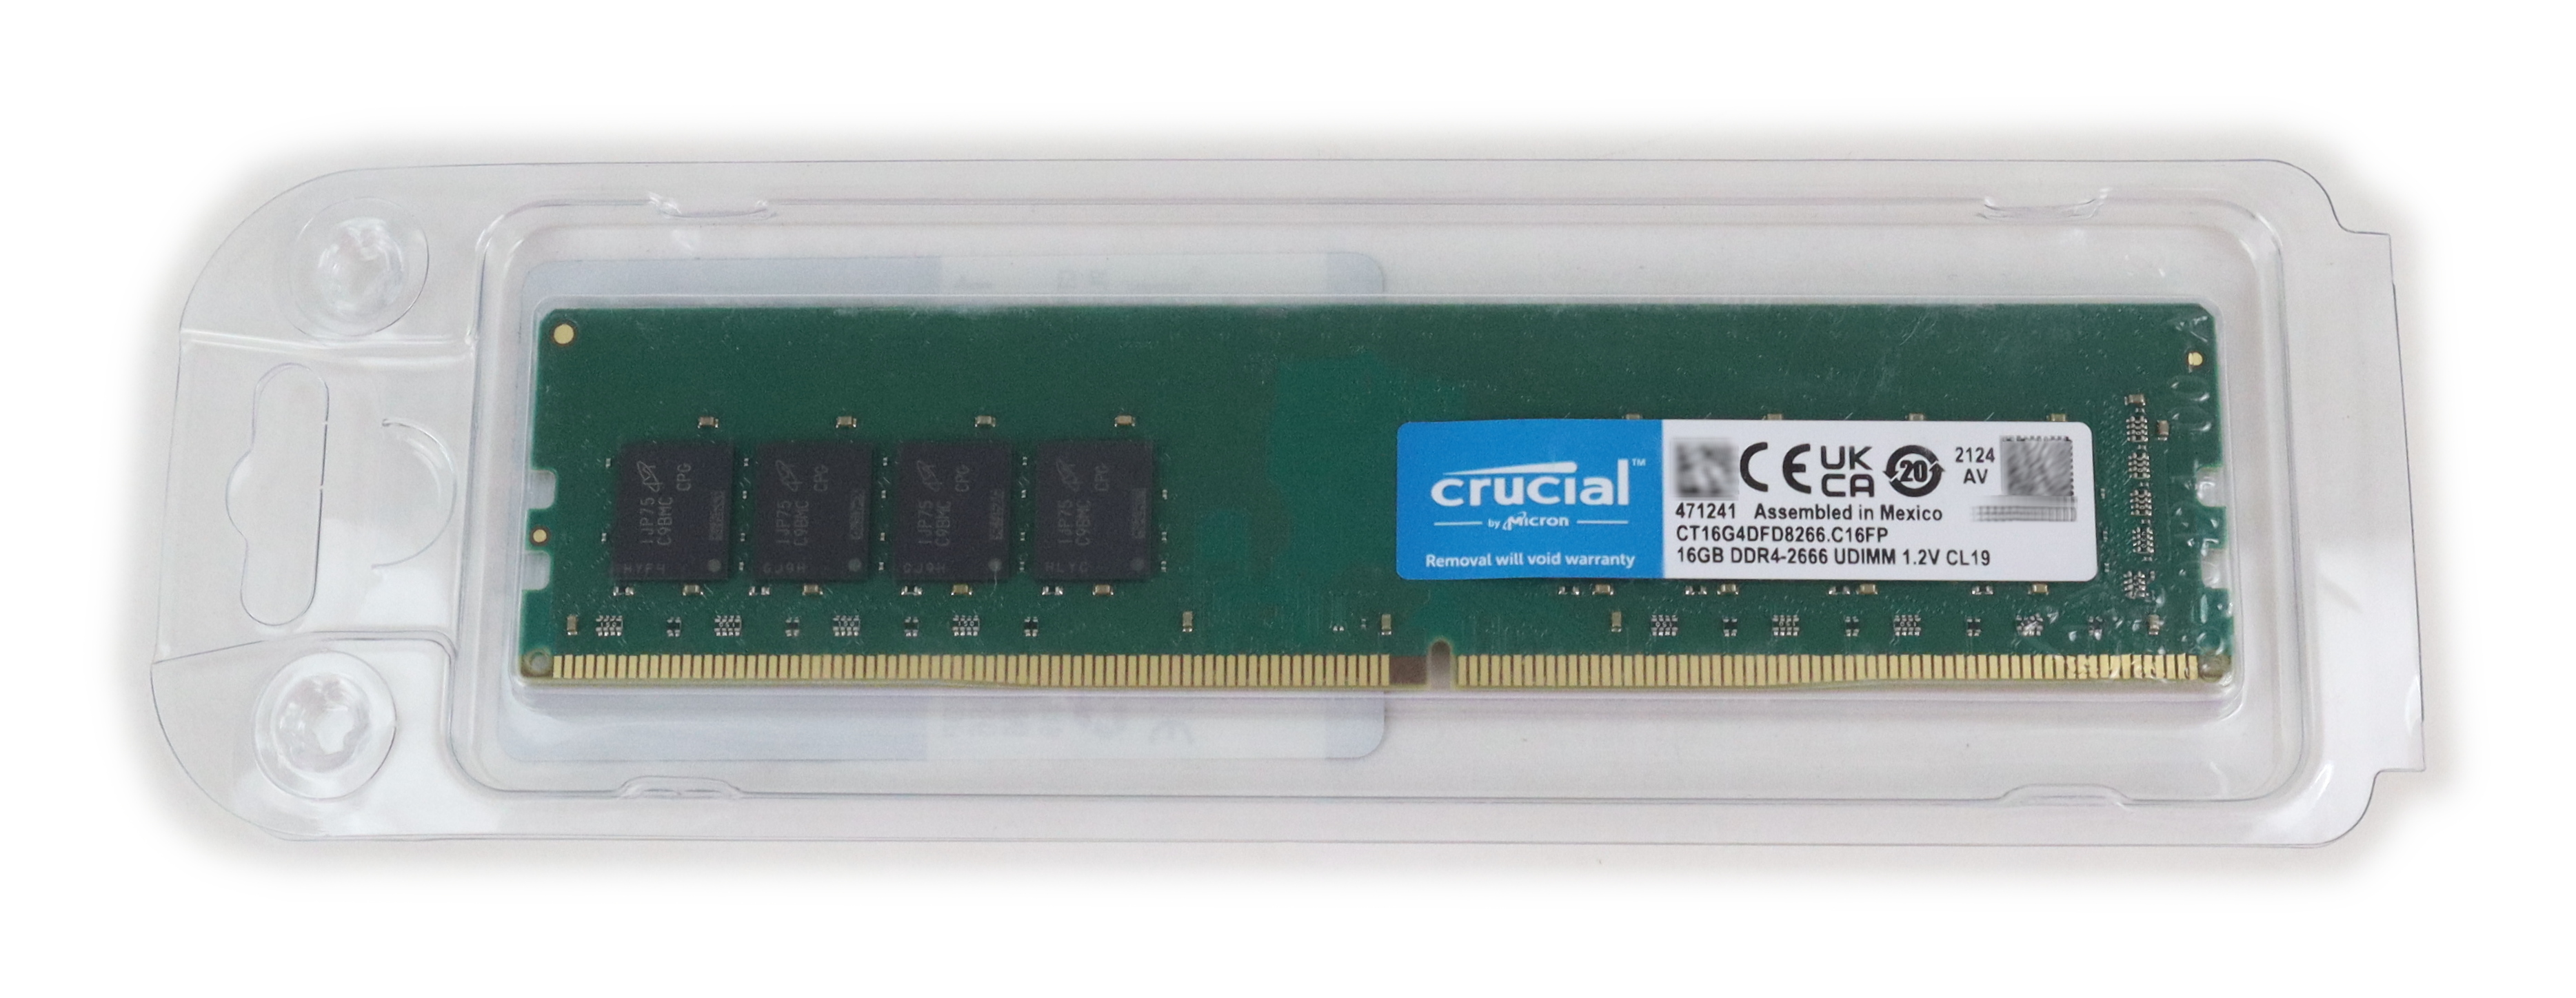 Crucial 16GB CT16G4DFD8266 DDR4-2666 UDIMM 1.2V CL19 For Desktop